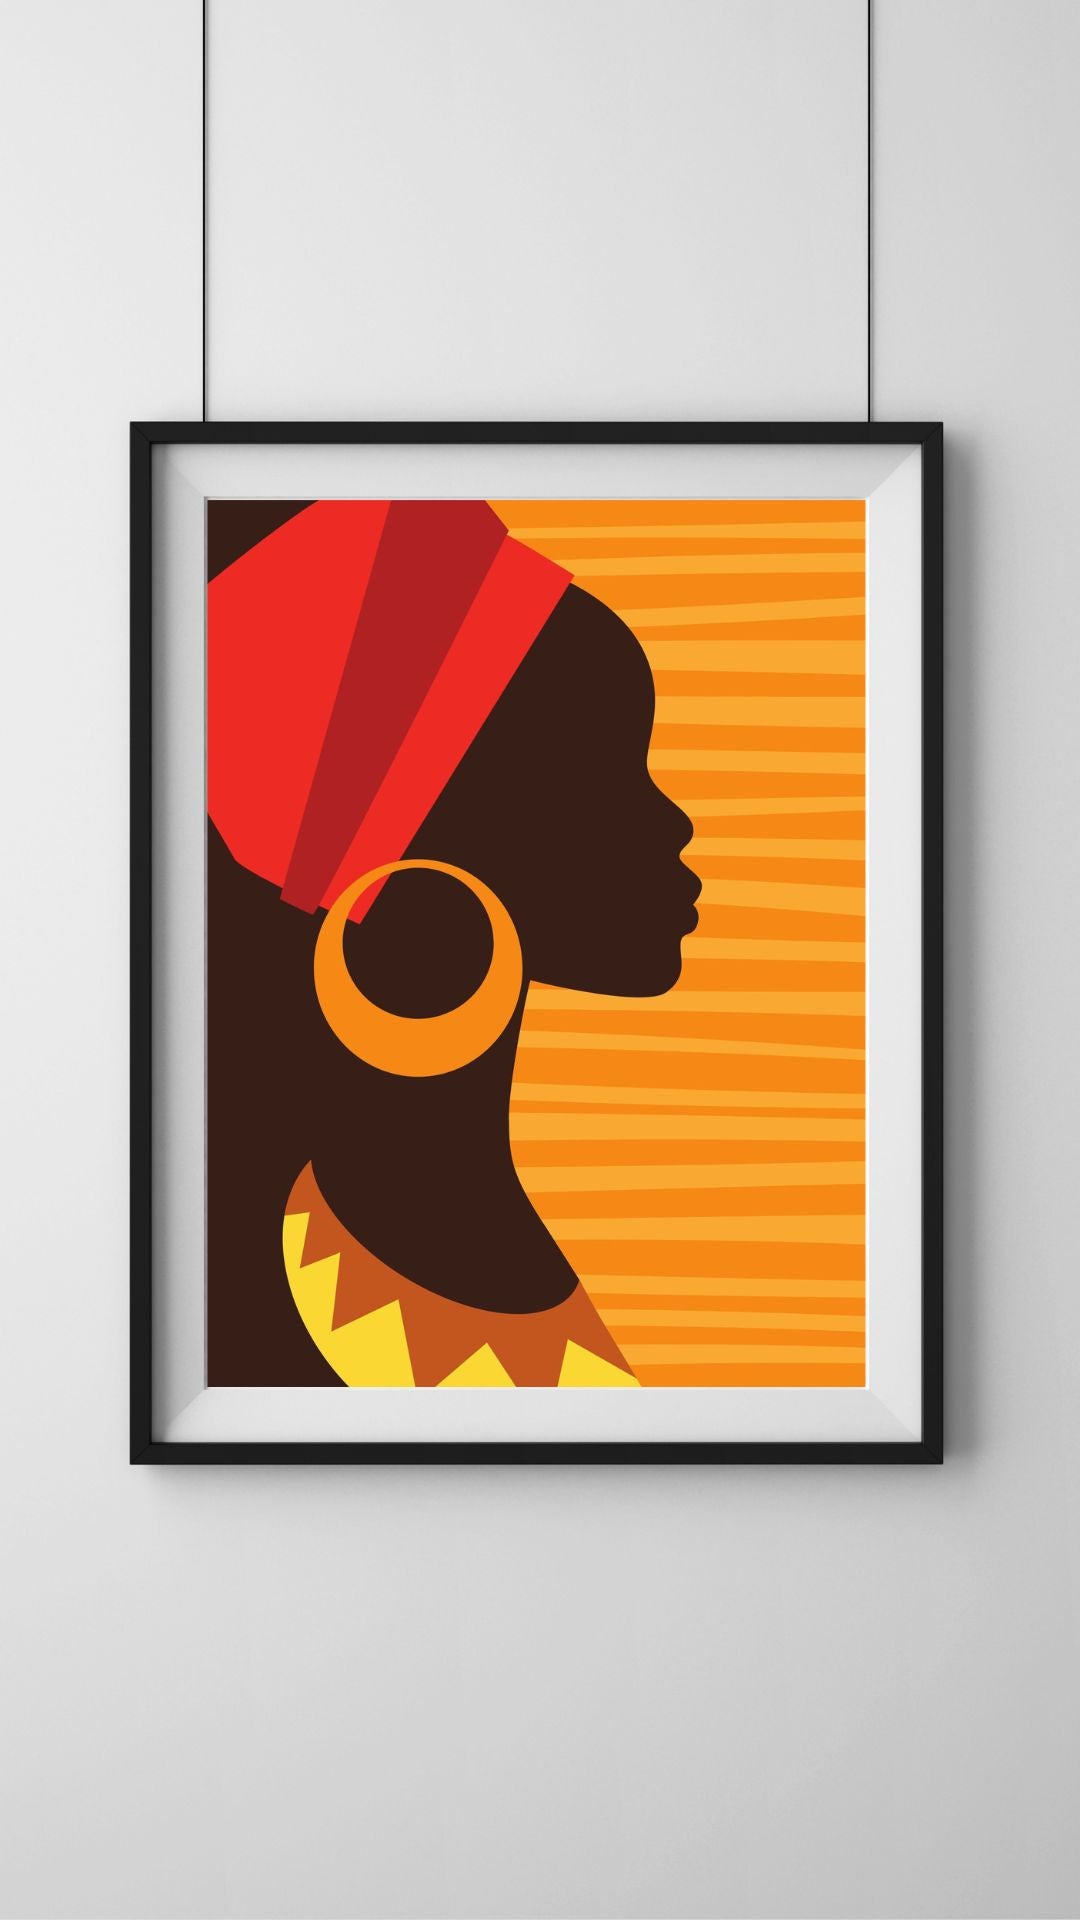 African Woman Silhouette Framed Art - Digital Download